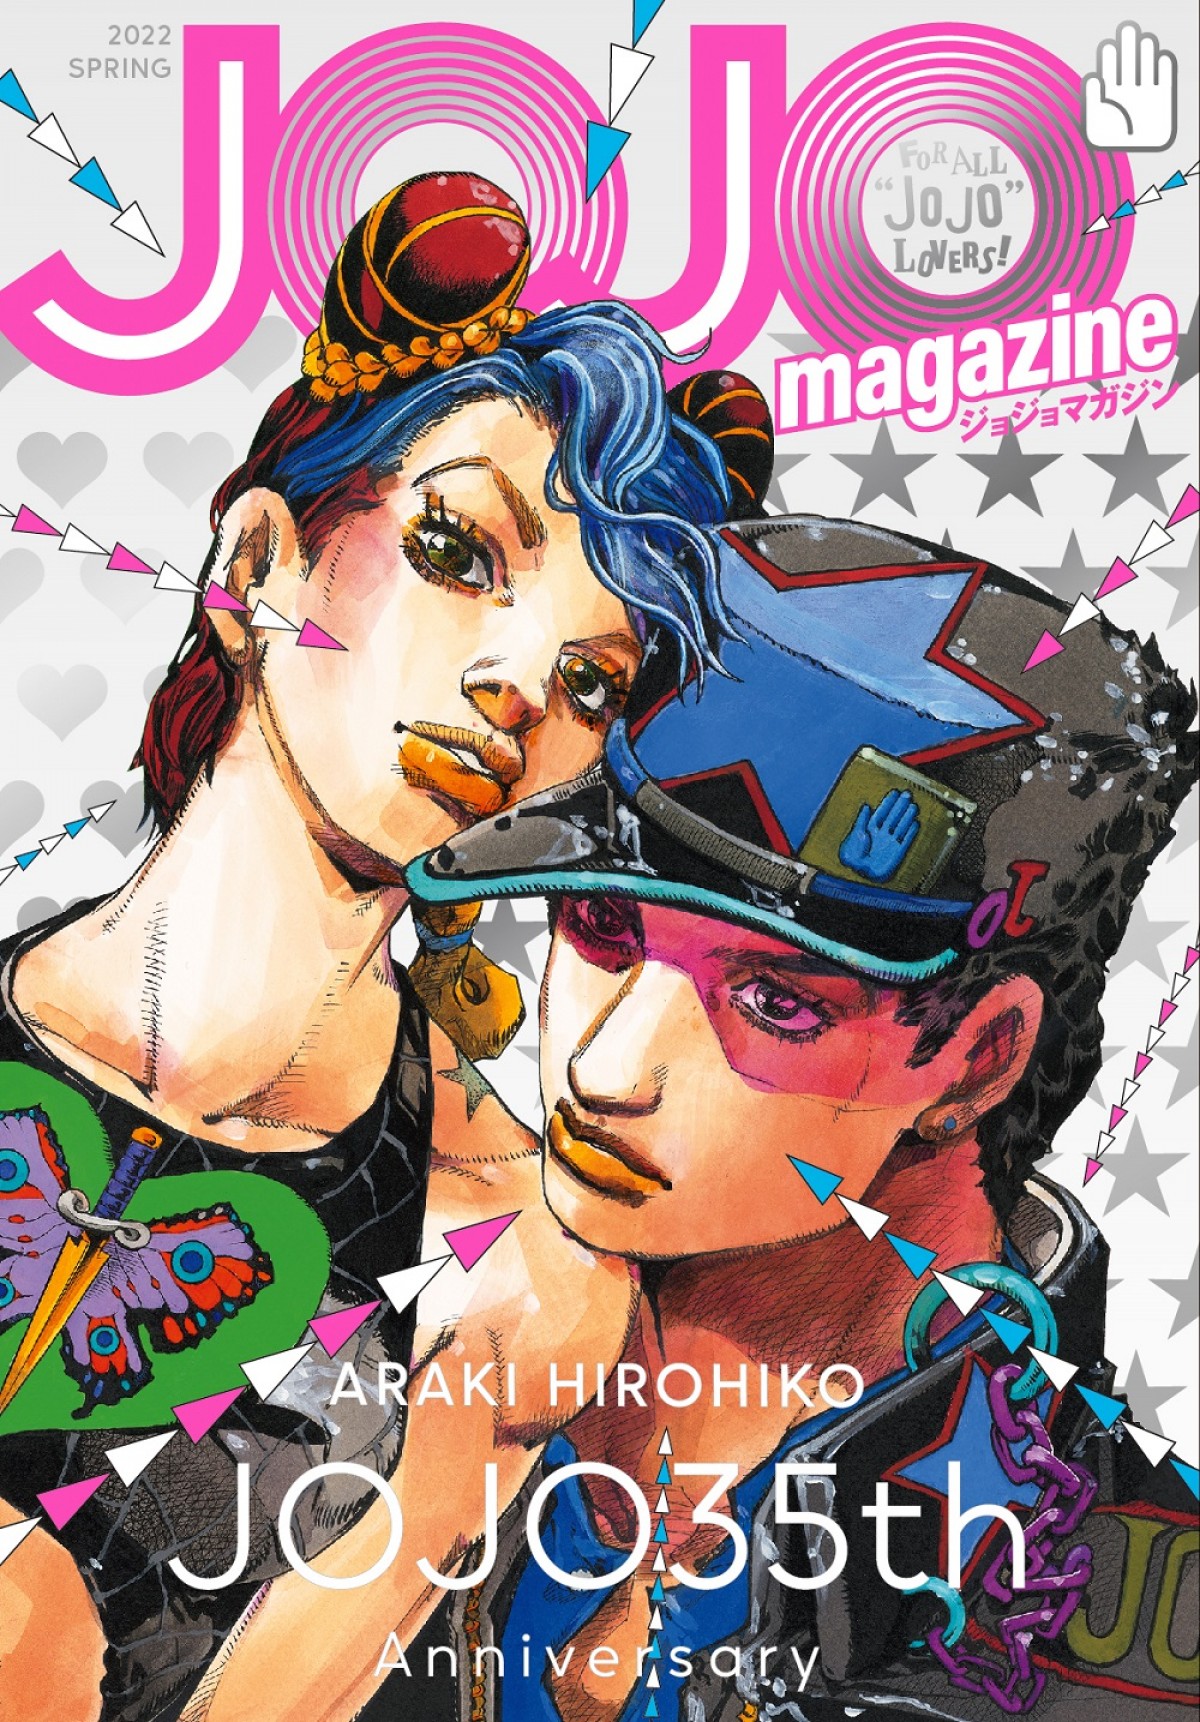 『JOJO magazine 2022 SPRING』表紙ビジュアル